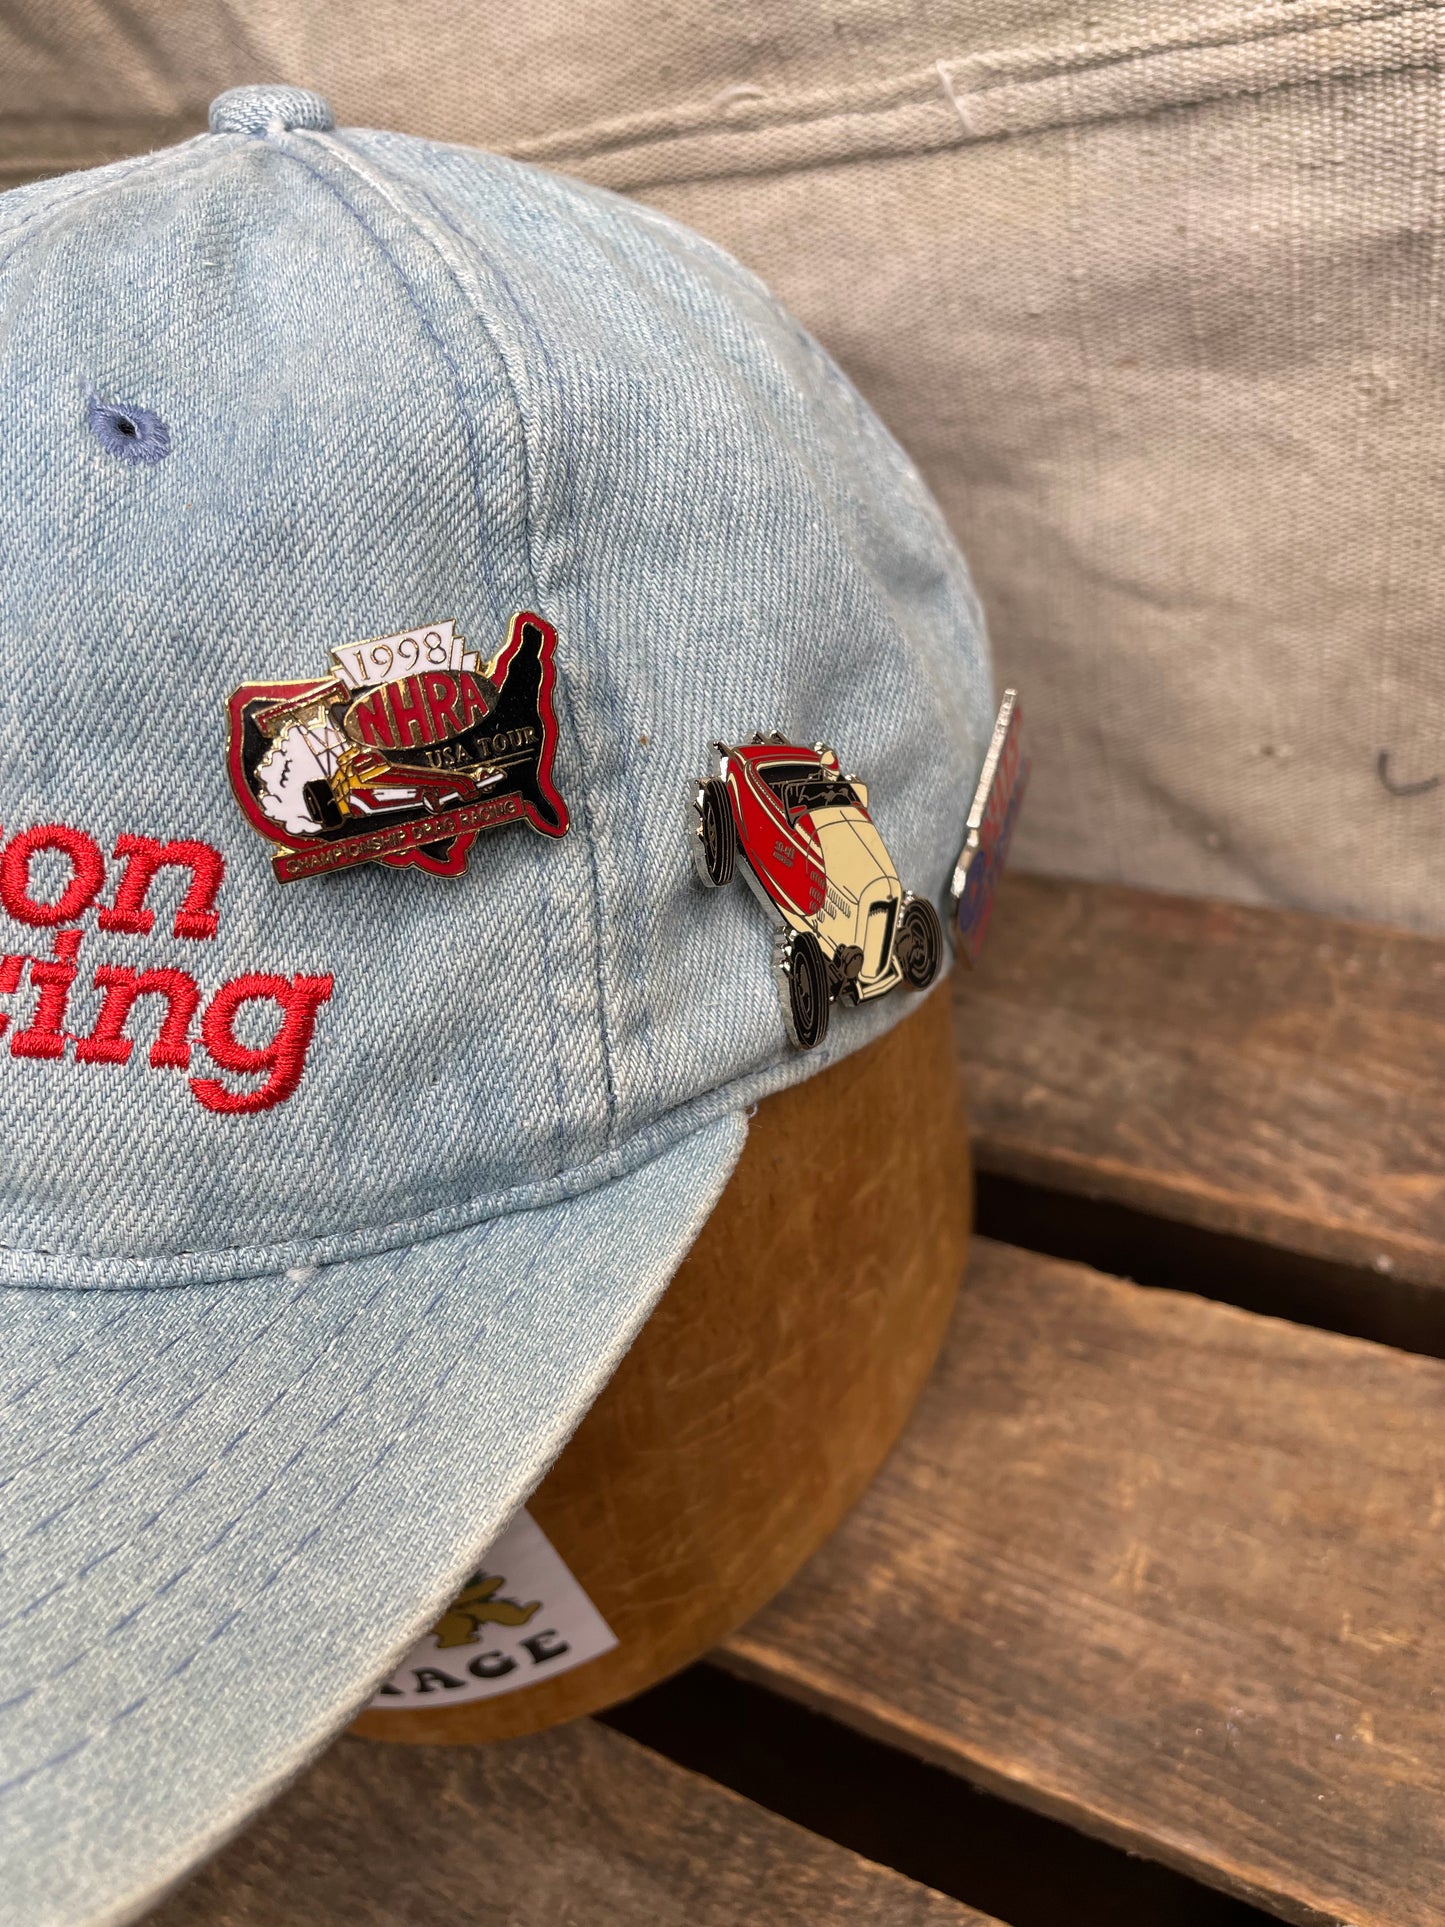 Vintage NHRA Winston Drag Racing Denim Dad Hat Adjustable W/ Pins 90s Y2K